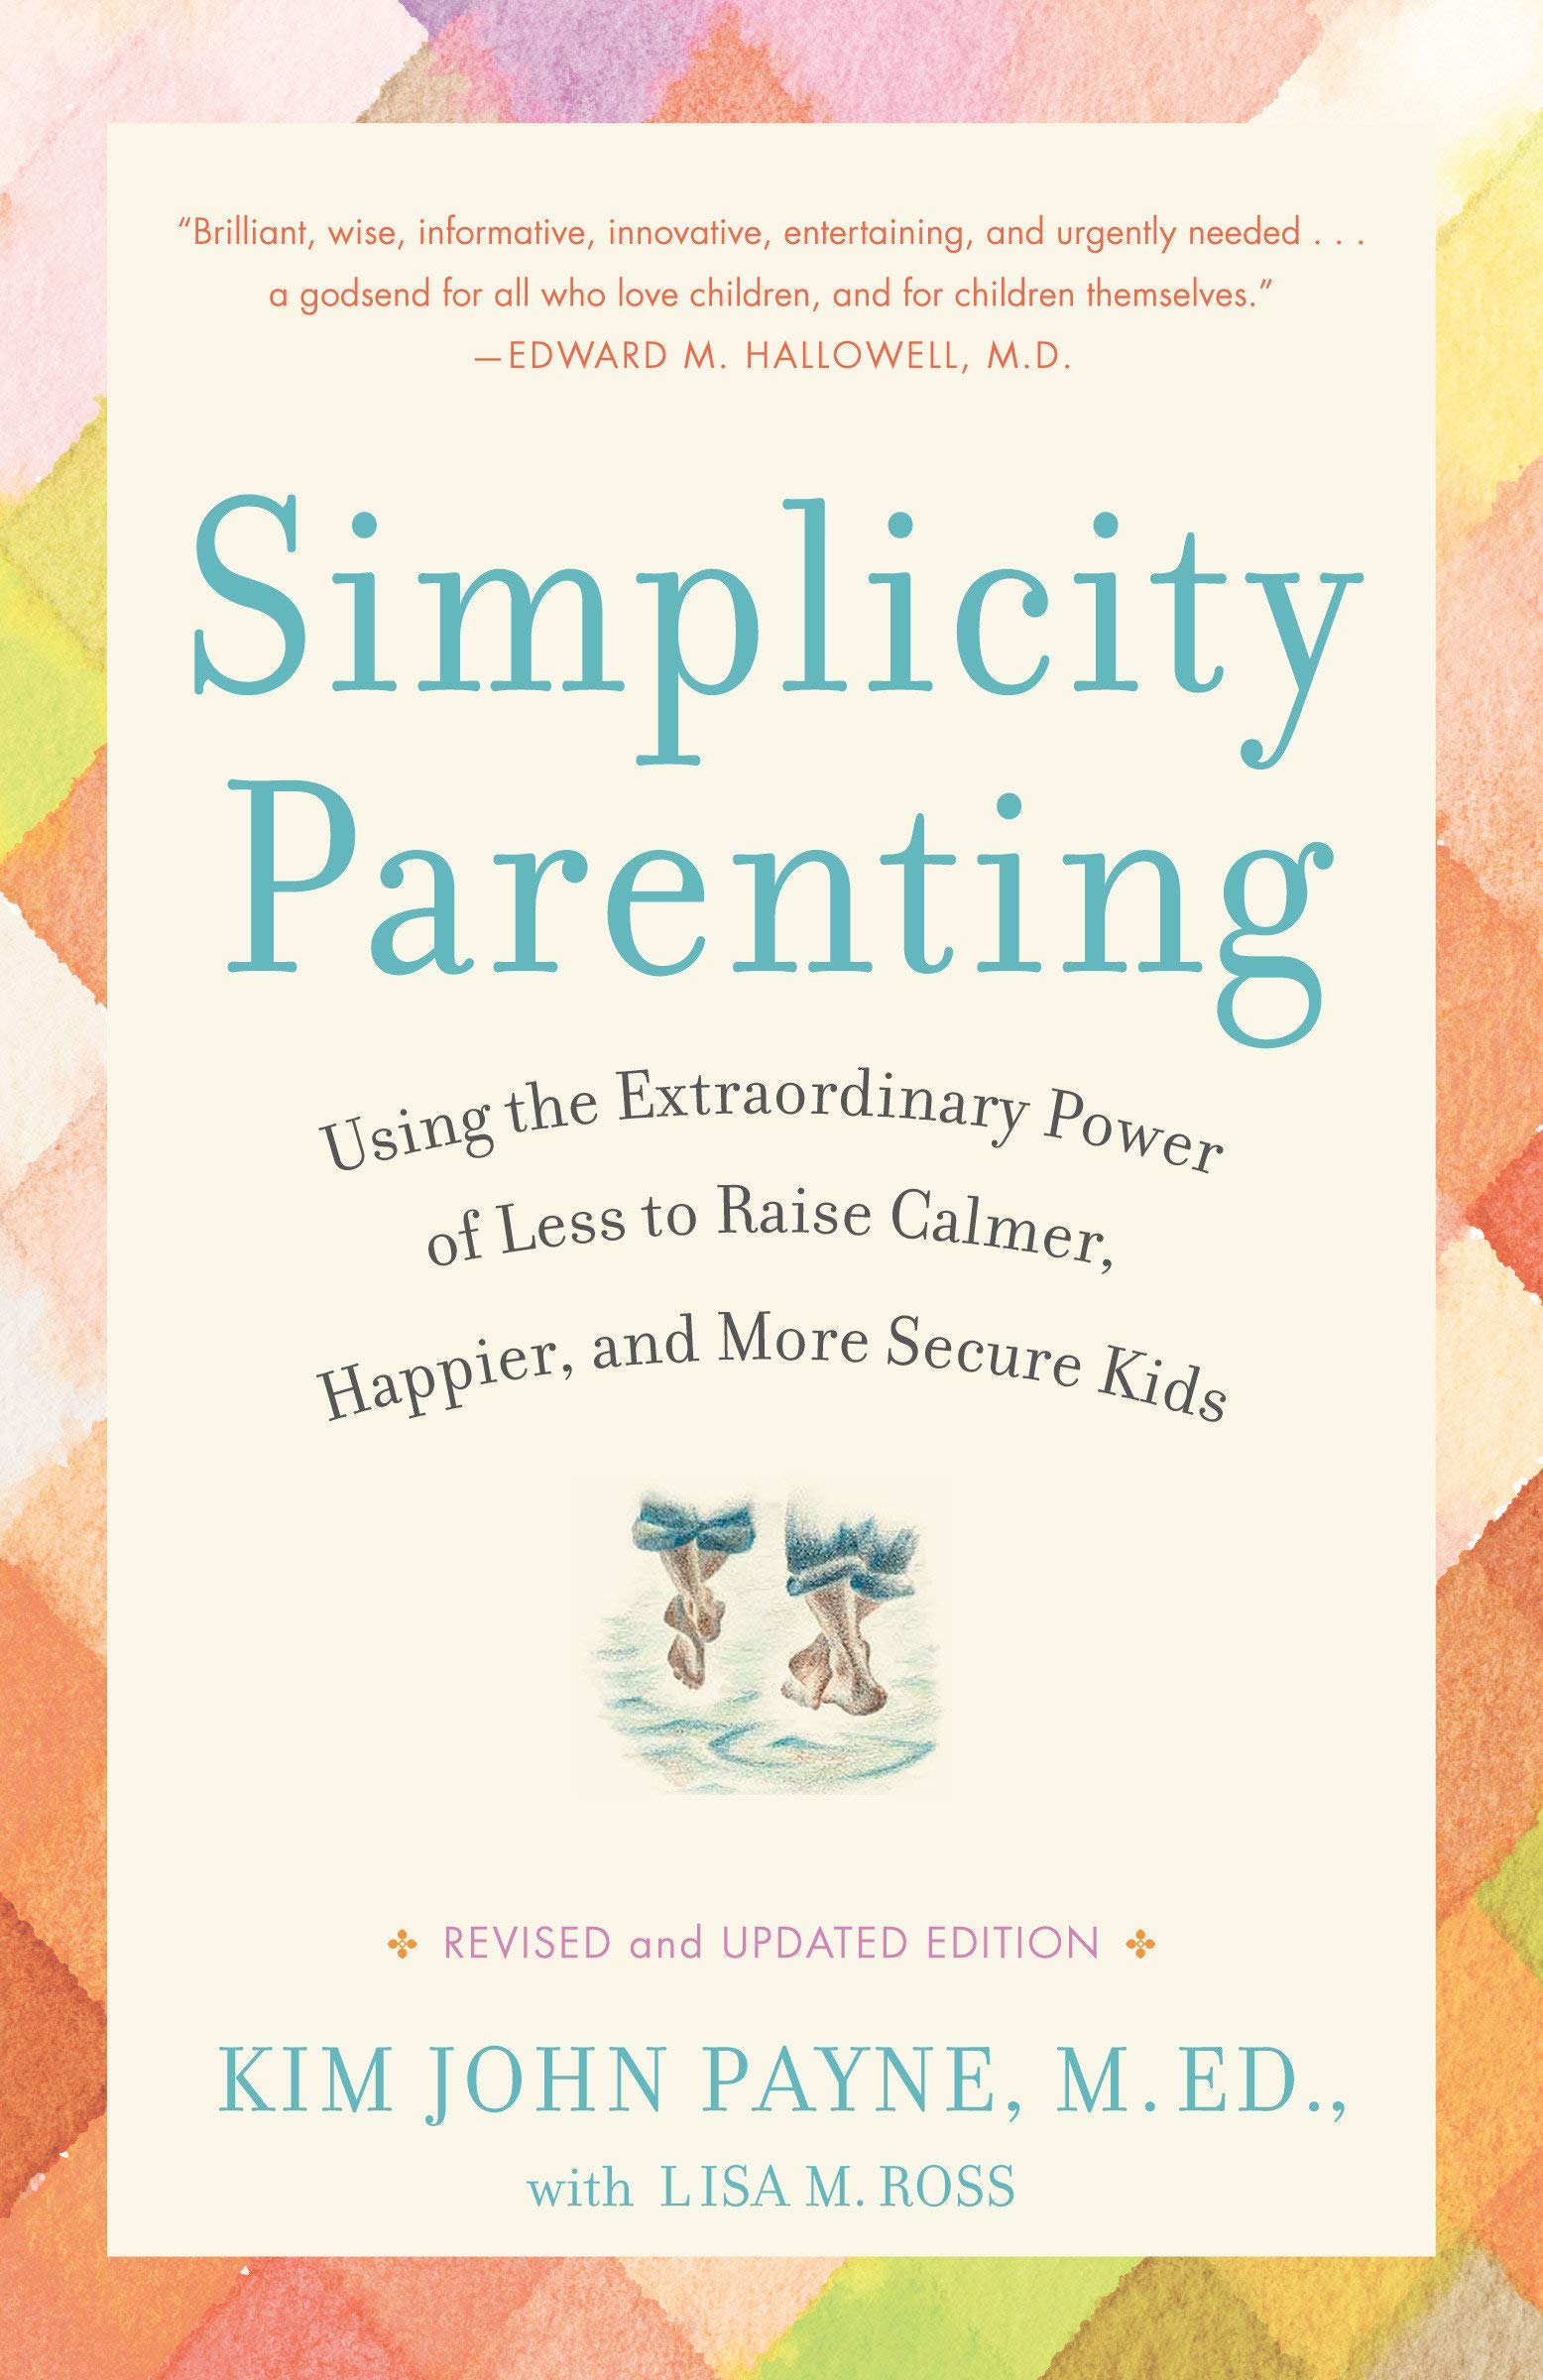 "Simplicity Parenting" by Kim John Payne, M.Ed., with Lisa M. Ross